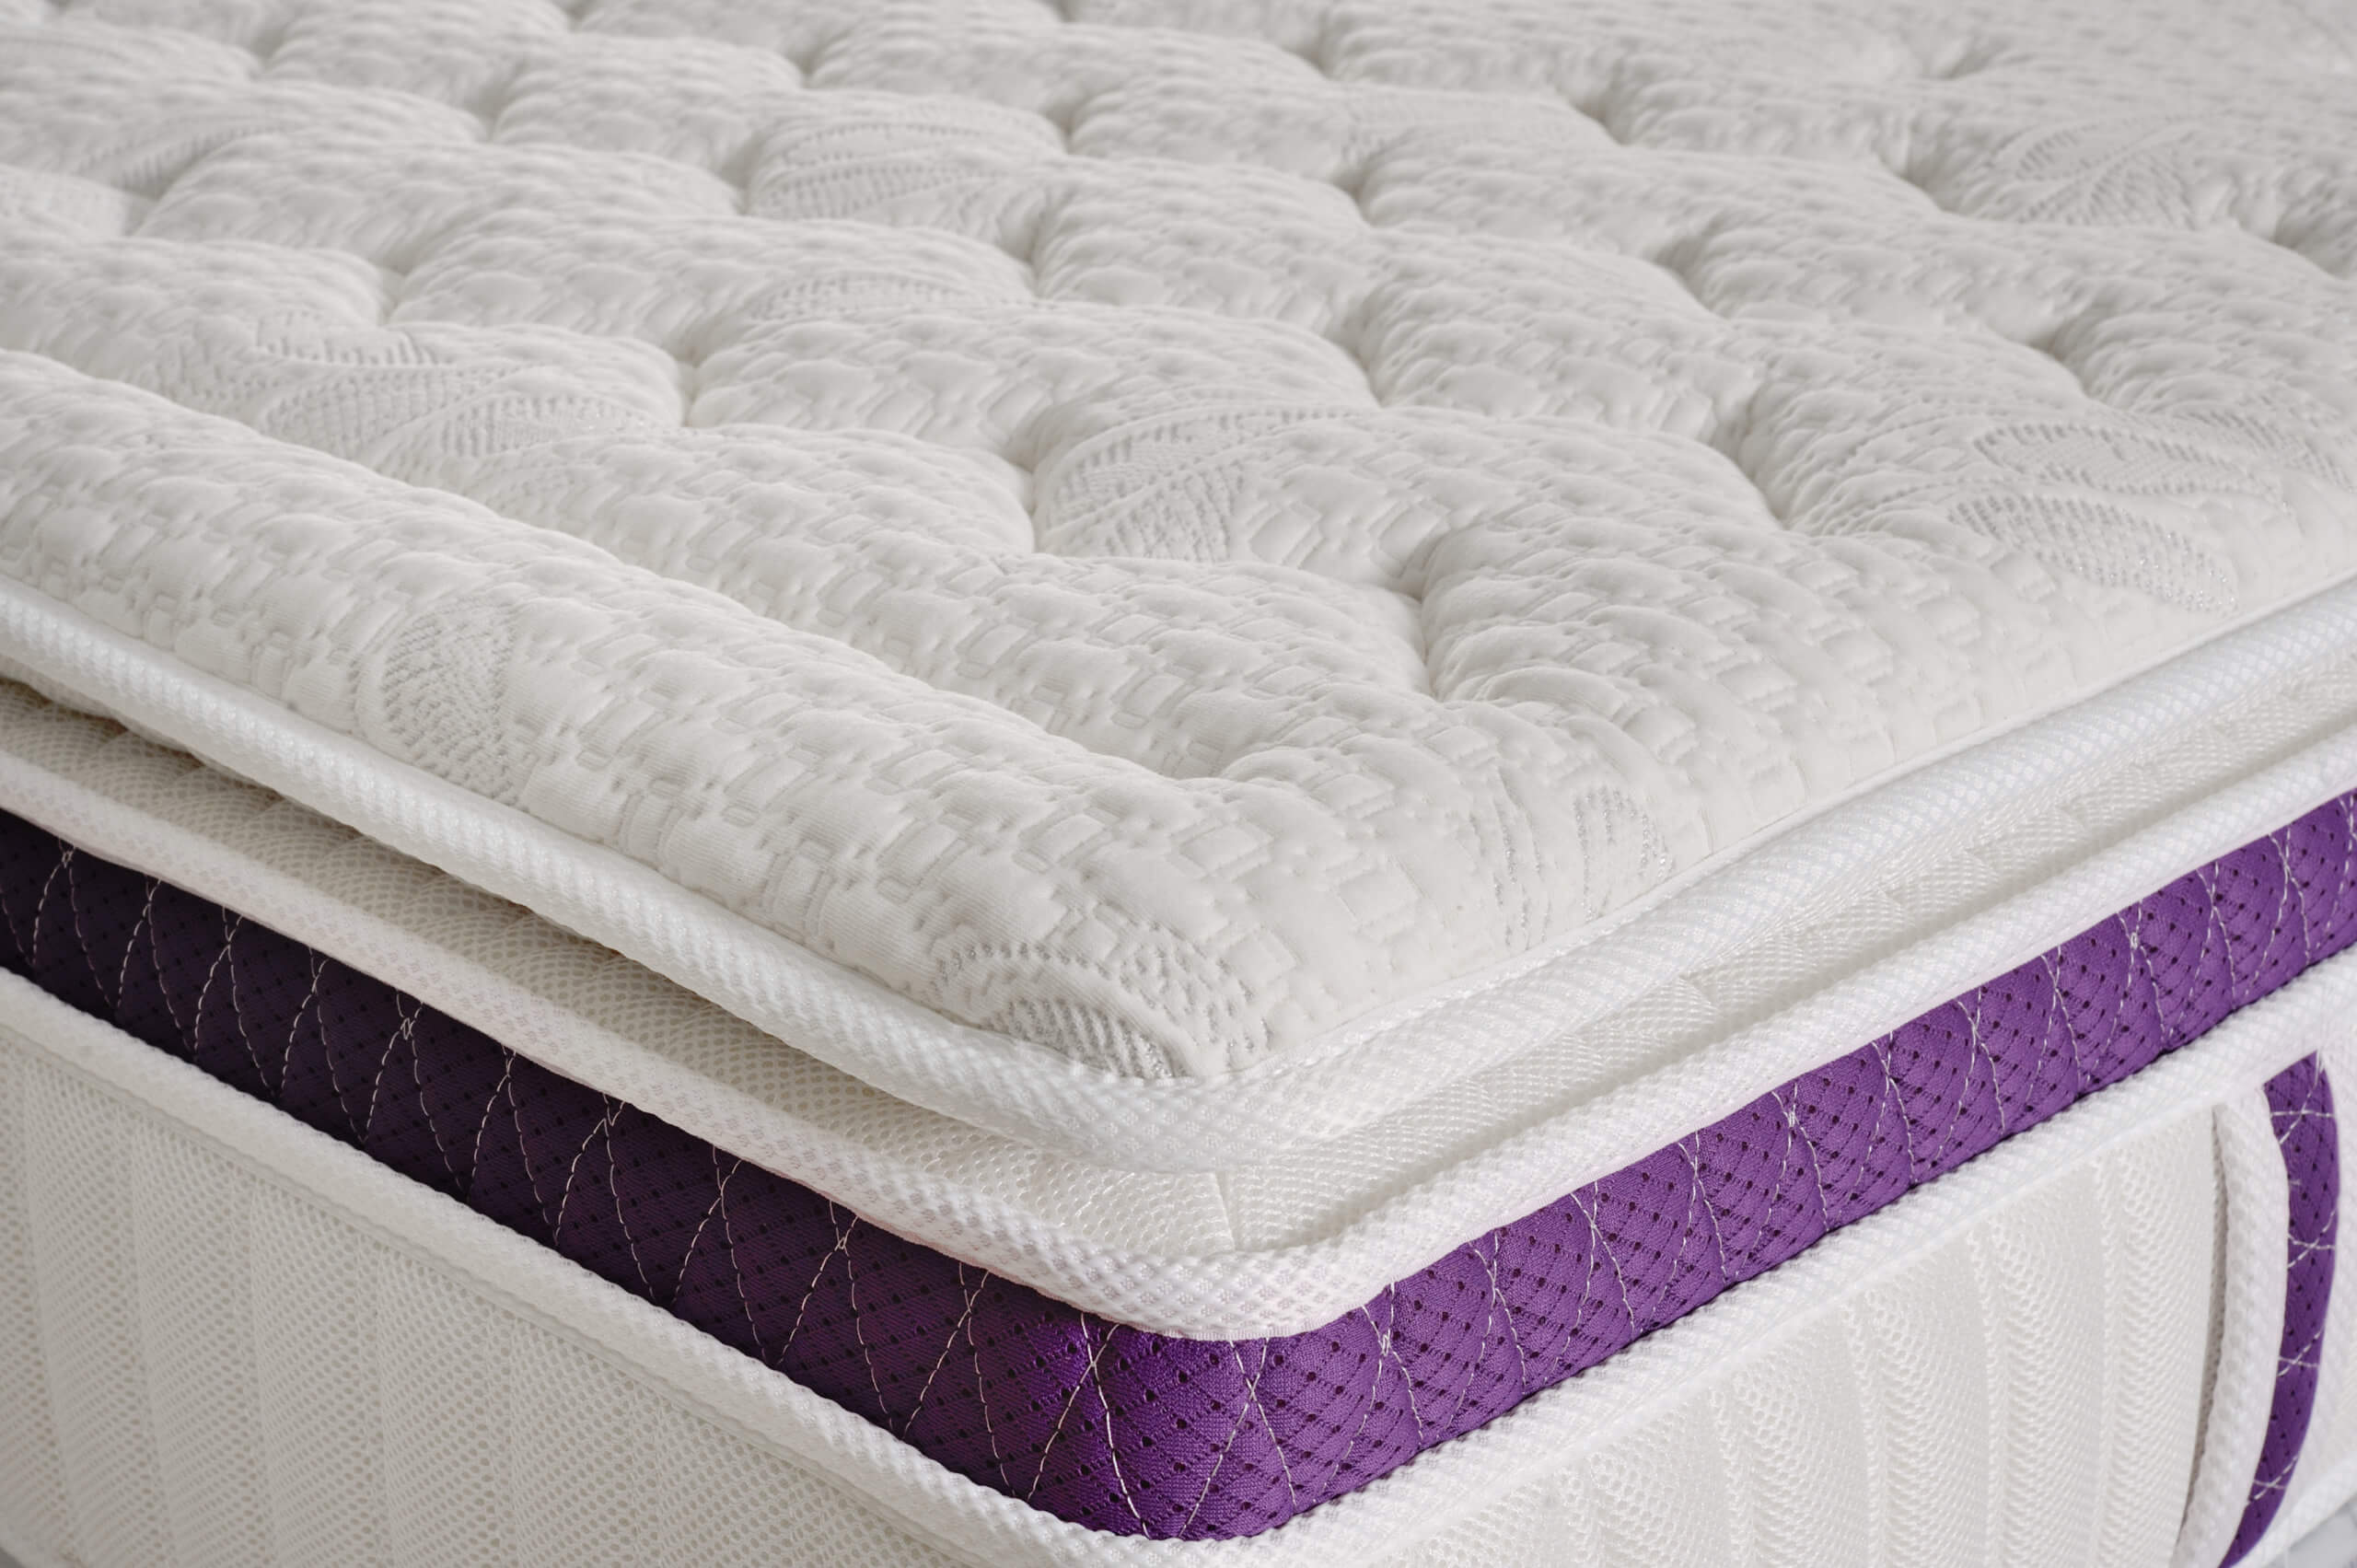 Affordable plush mattress